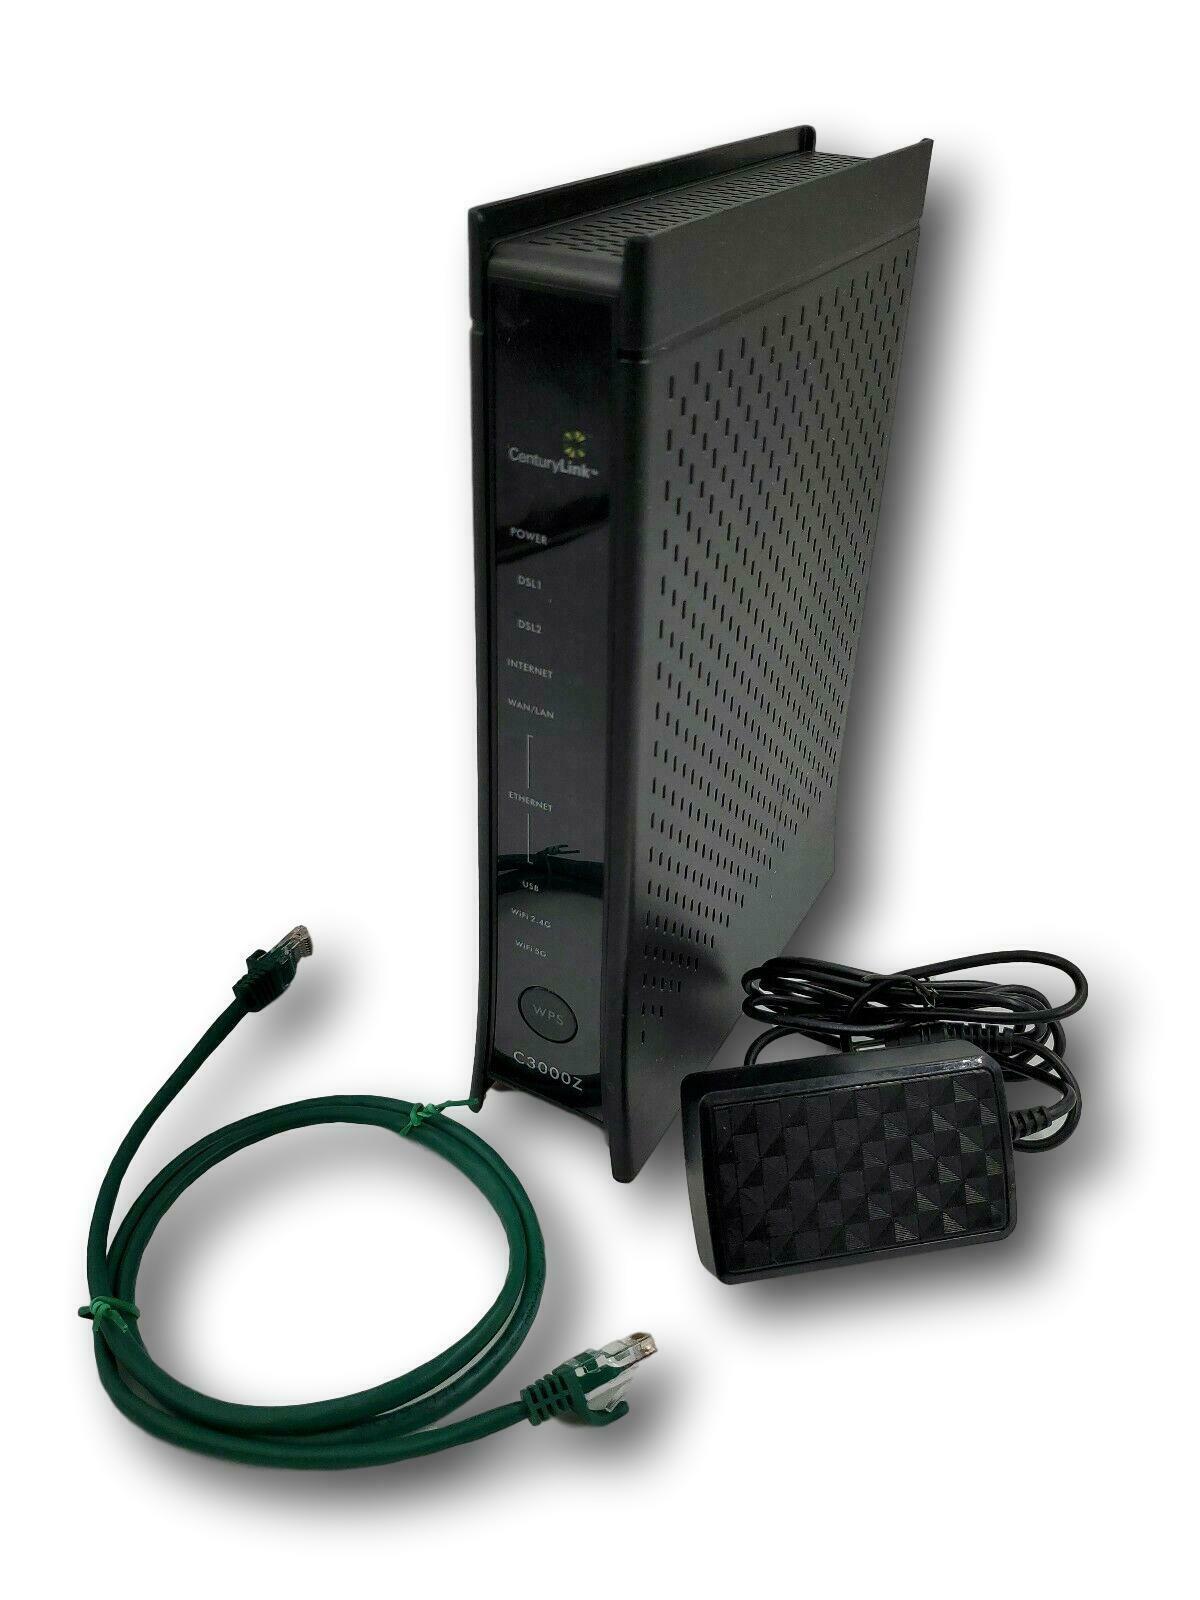 Centurylink Zyxel C3000z Ac2200 Vdsl2 Gateway Wireless Wifi Router Modem Bonded